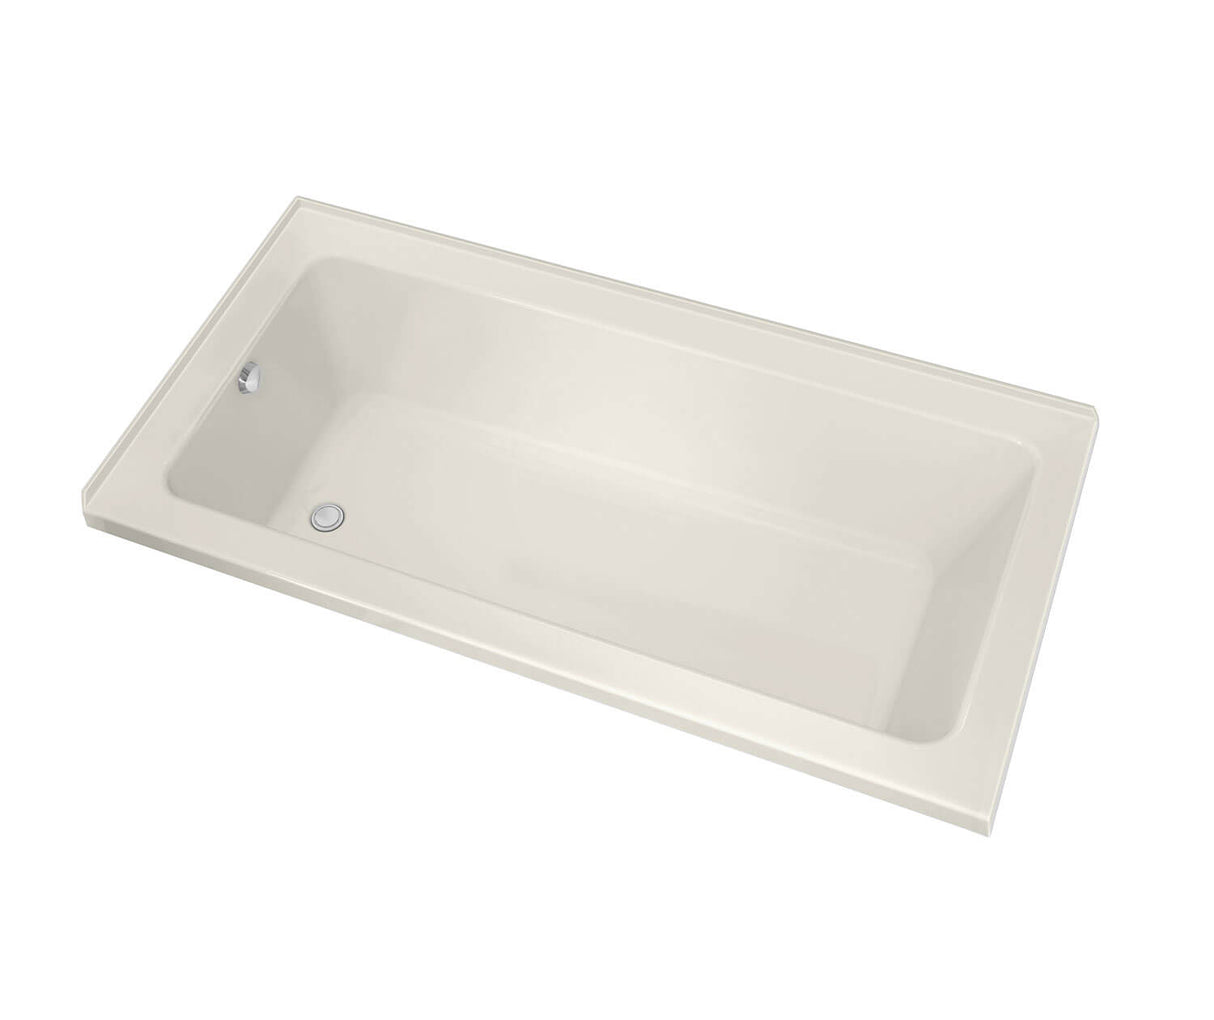 MAAX 106202-L-097-007 Pose 6032 IF Acrylic Corner Left Left-Hand Drain Combined Whirlpool & Aeroeffect Bathtub in Biscuit